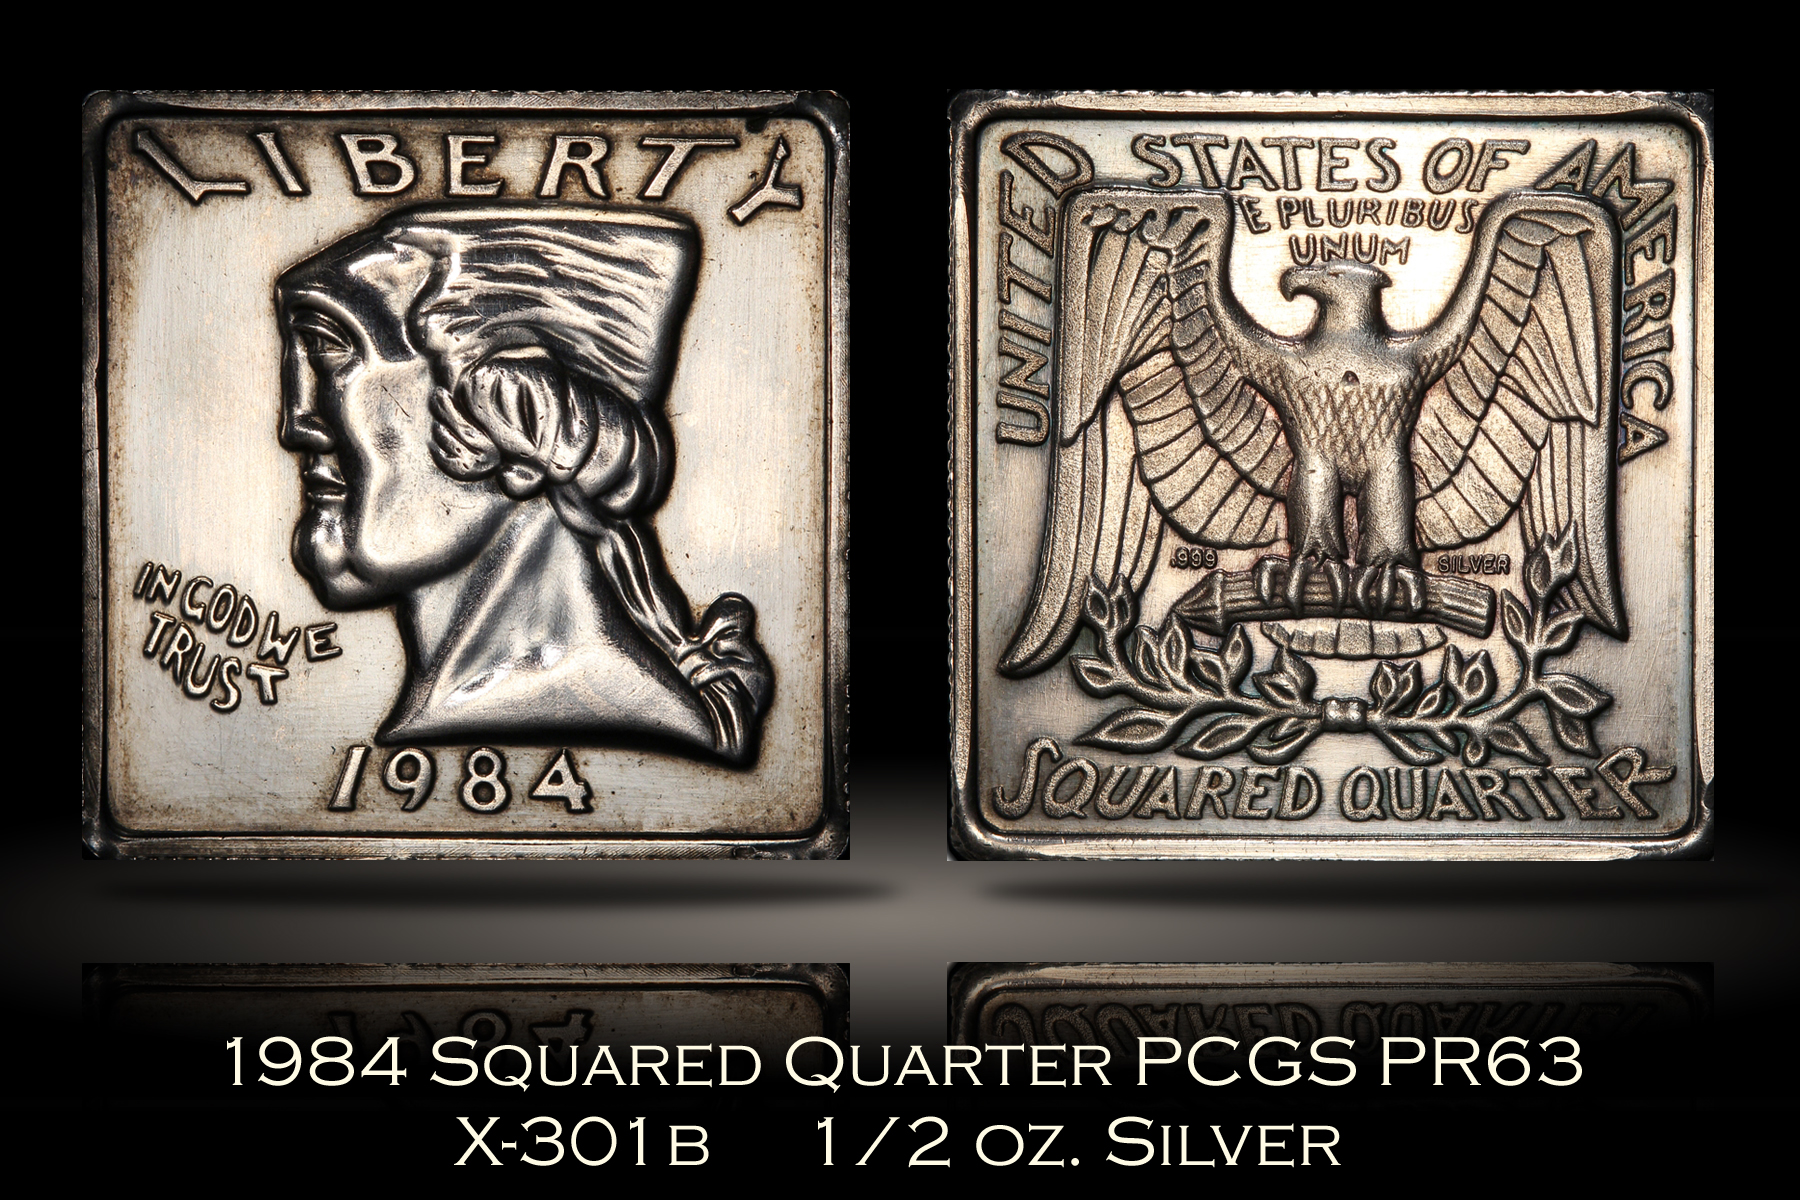 1984 Squared Quarter 1/2 oz. Silver X-301b PCGS PR63